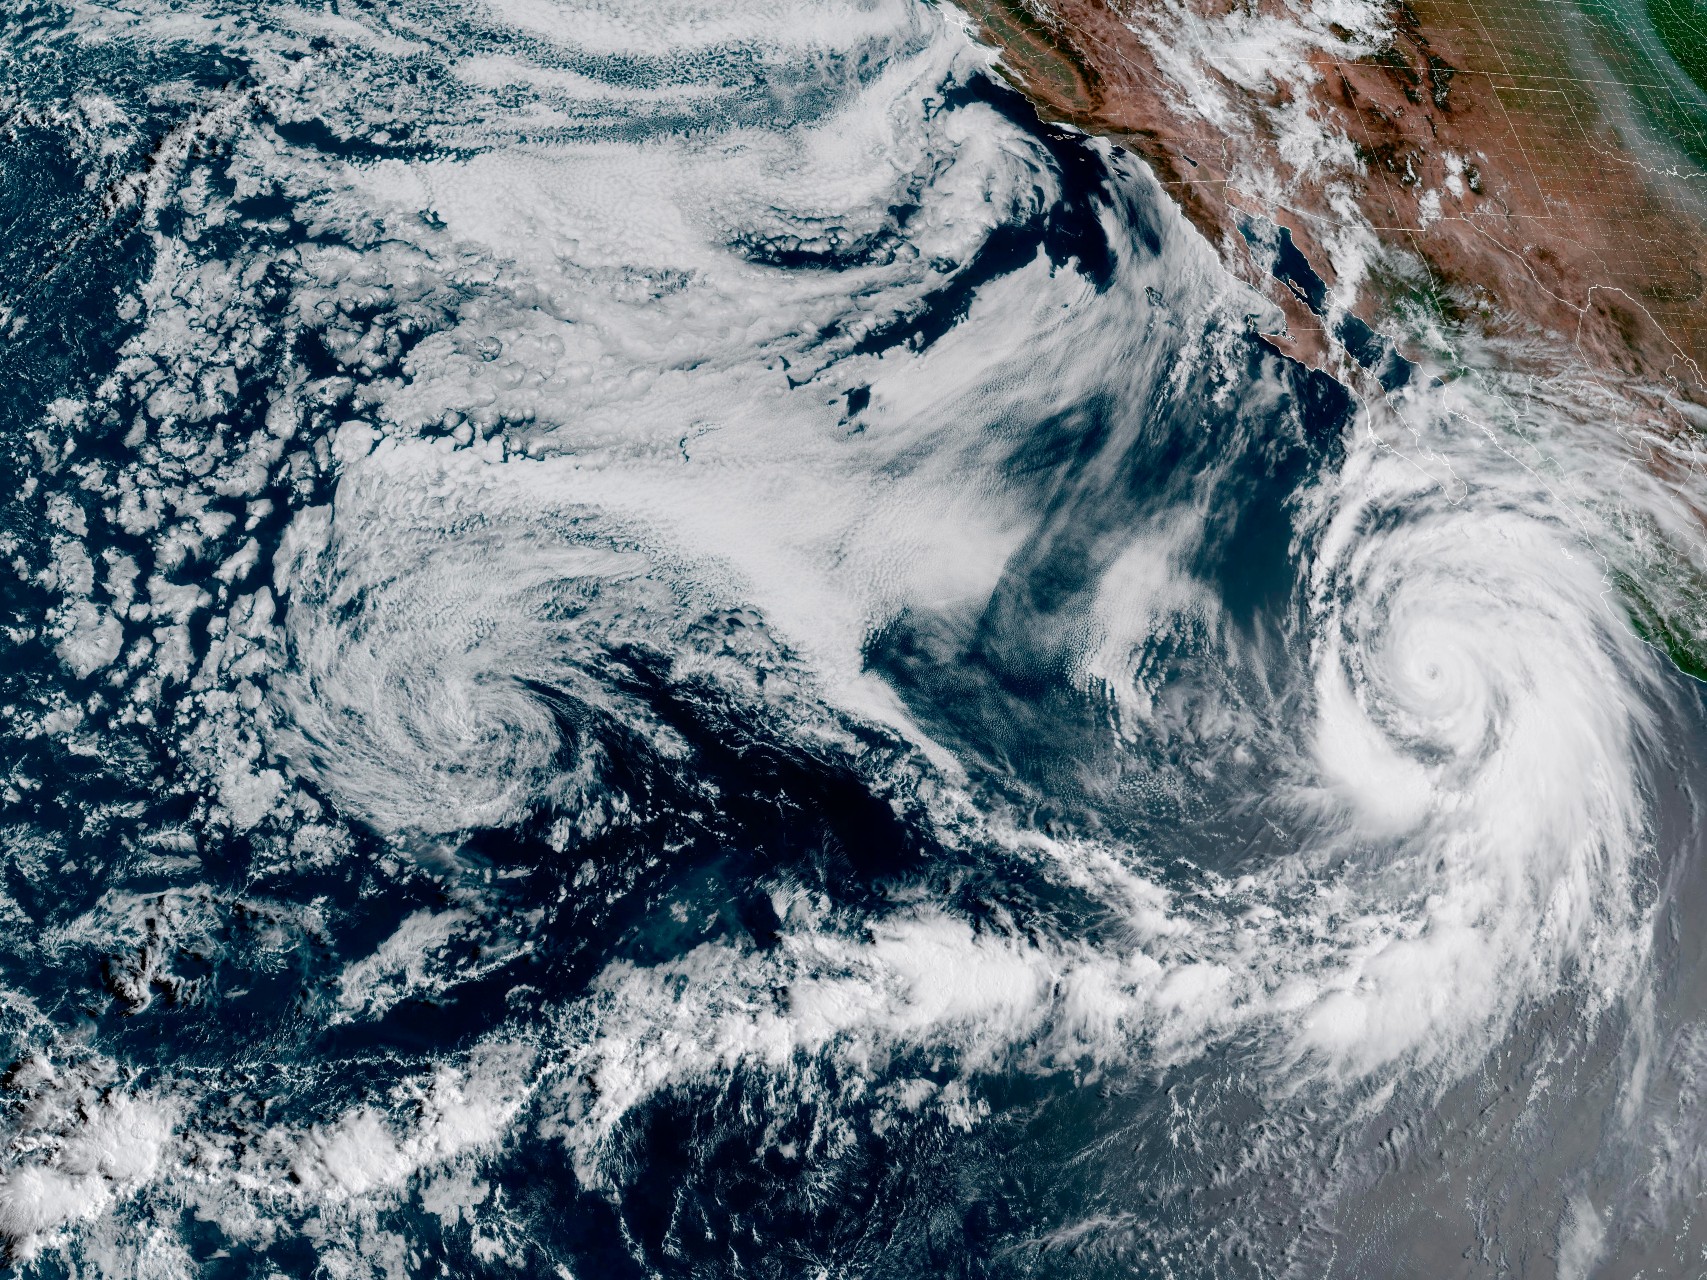 Hurricane Hilary is headed to California. See the path, impact